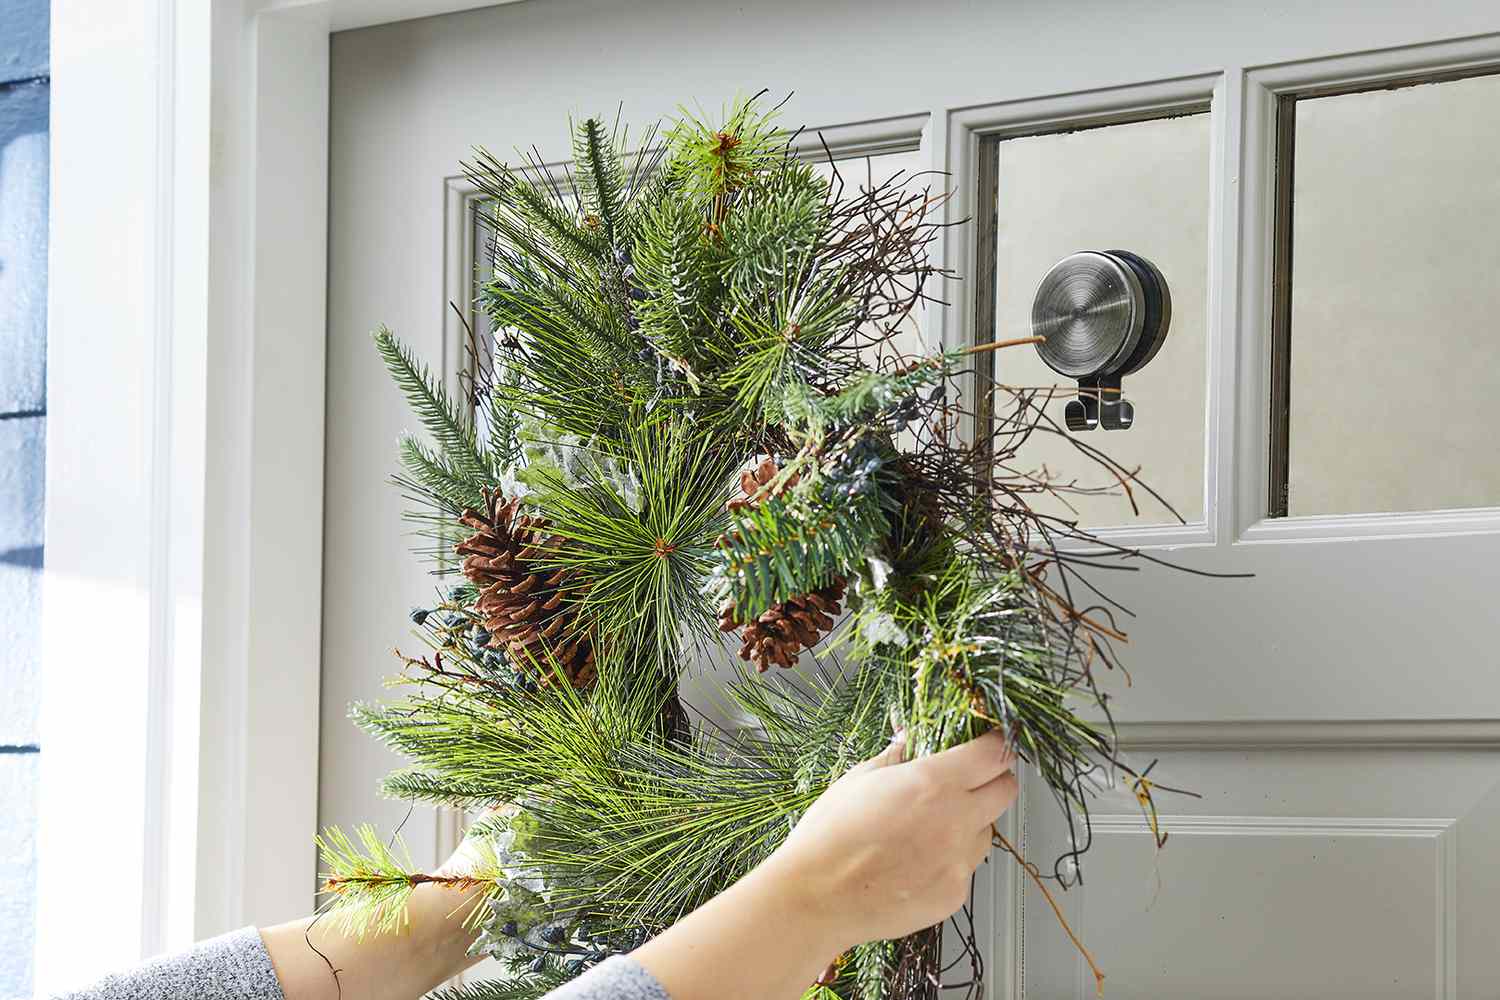 hook on glass holding evergreen wreath